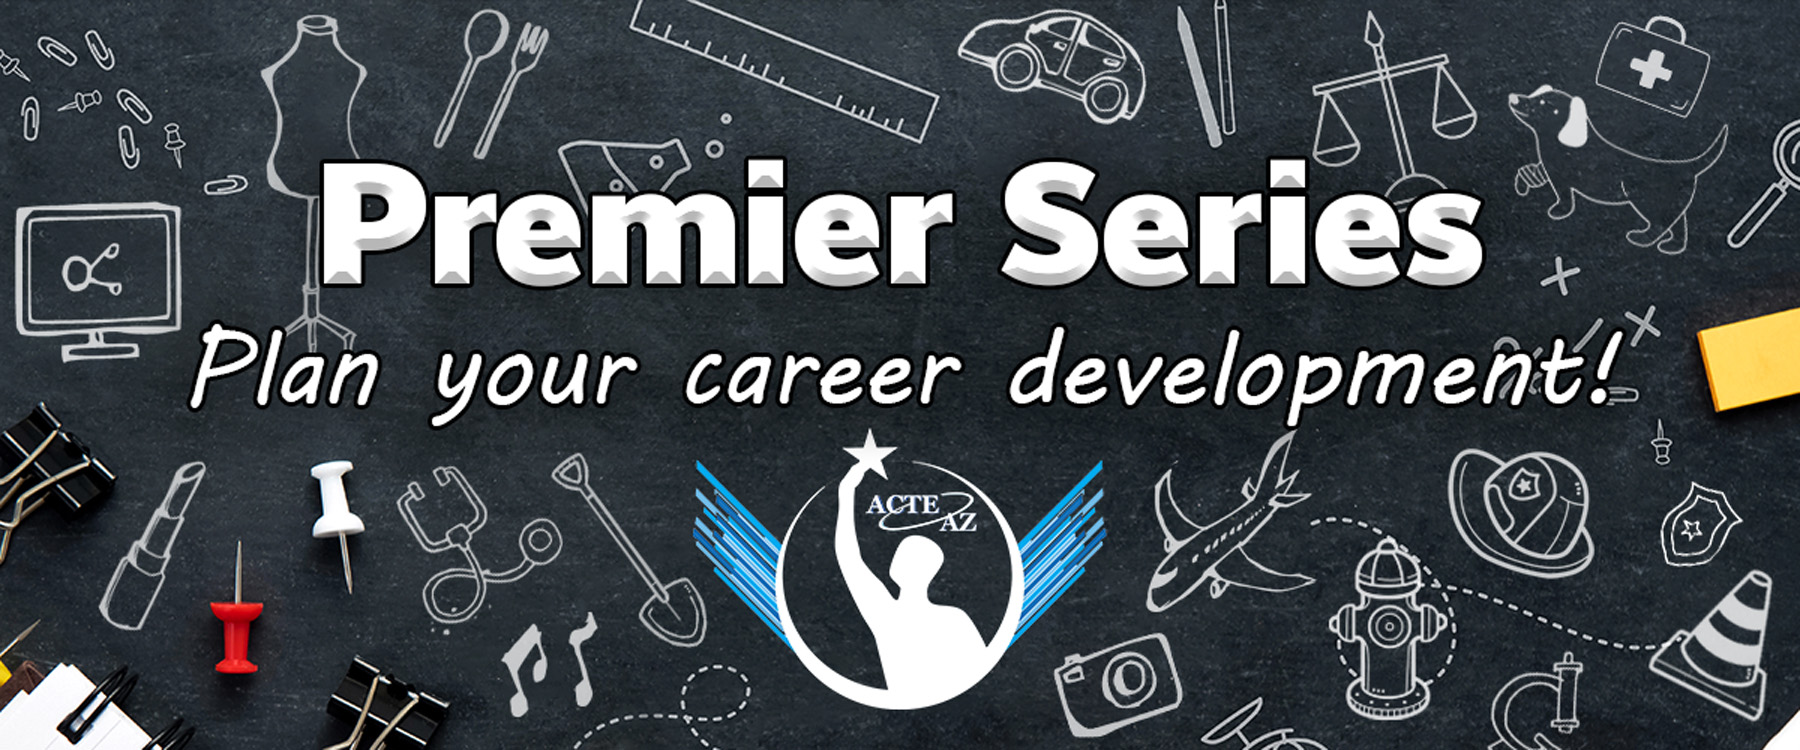 Premier Series - Plan your career development!